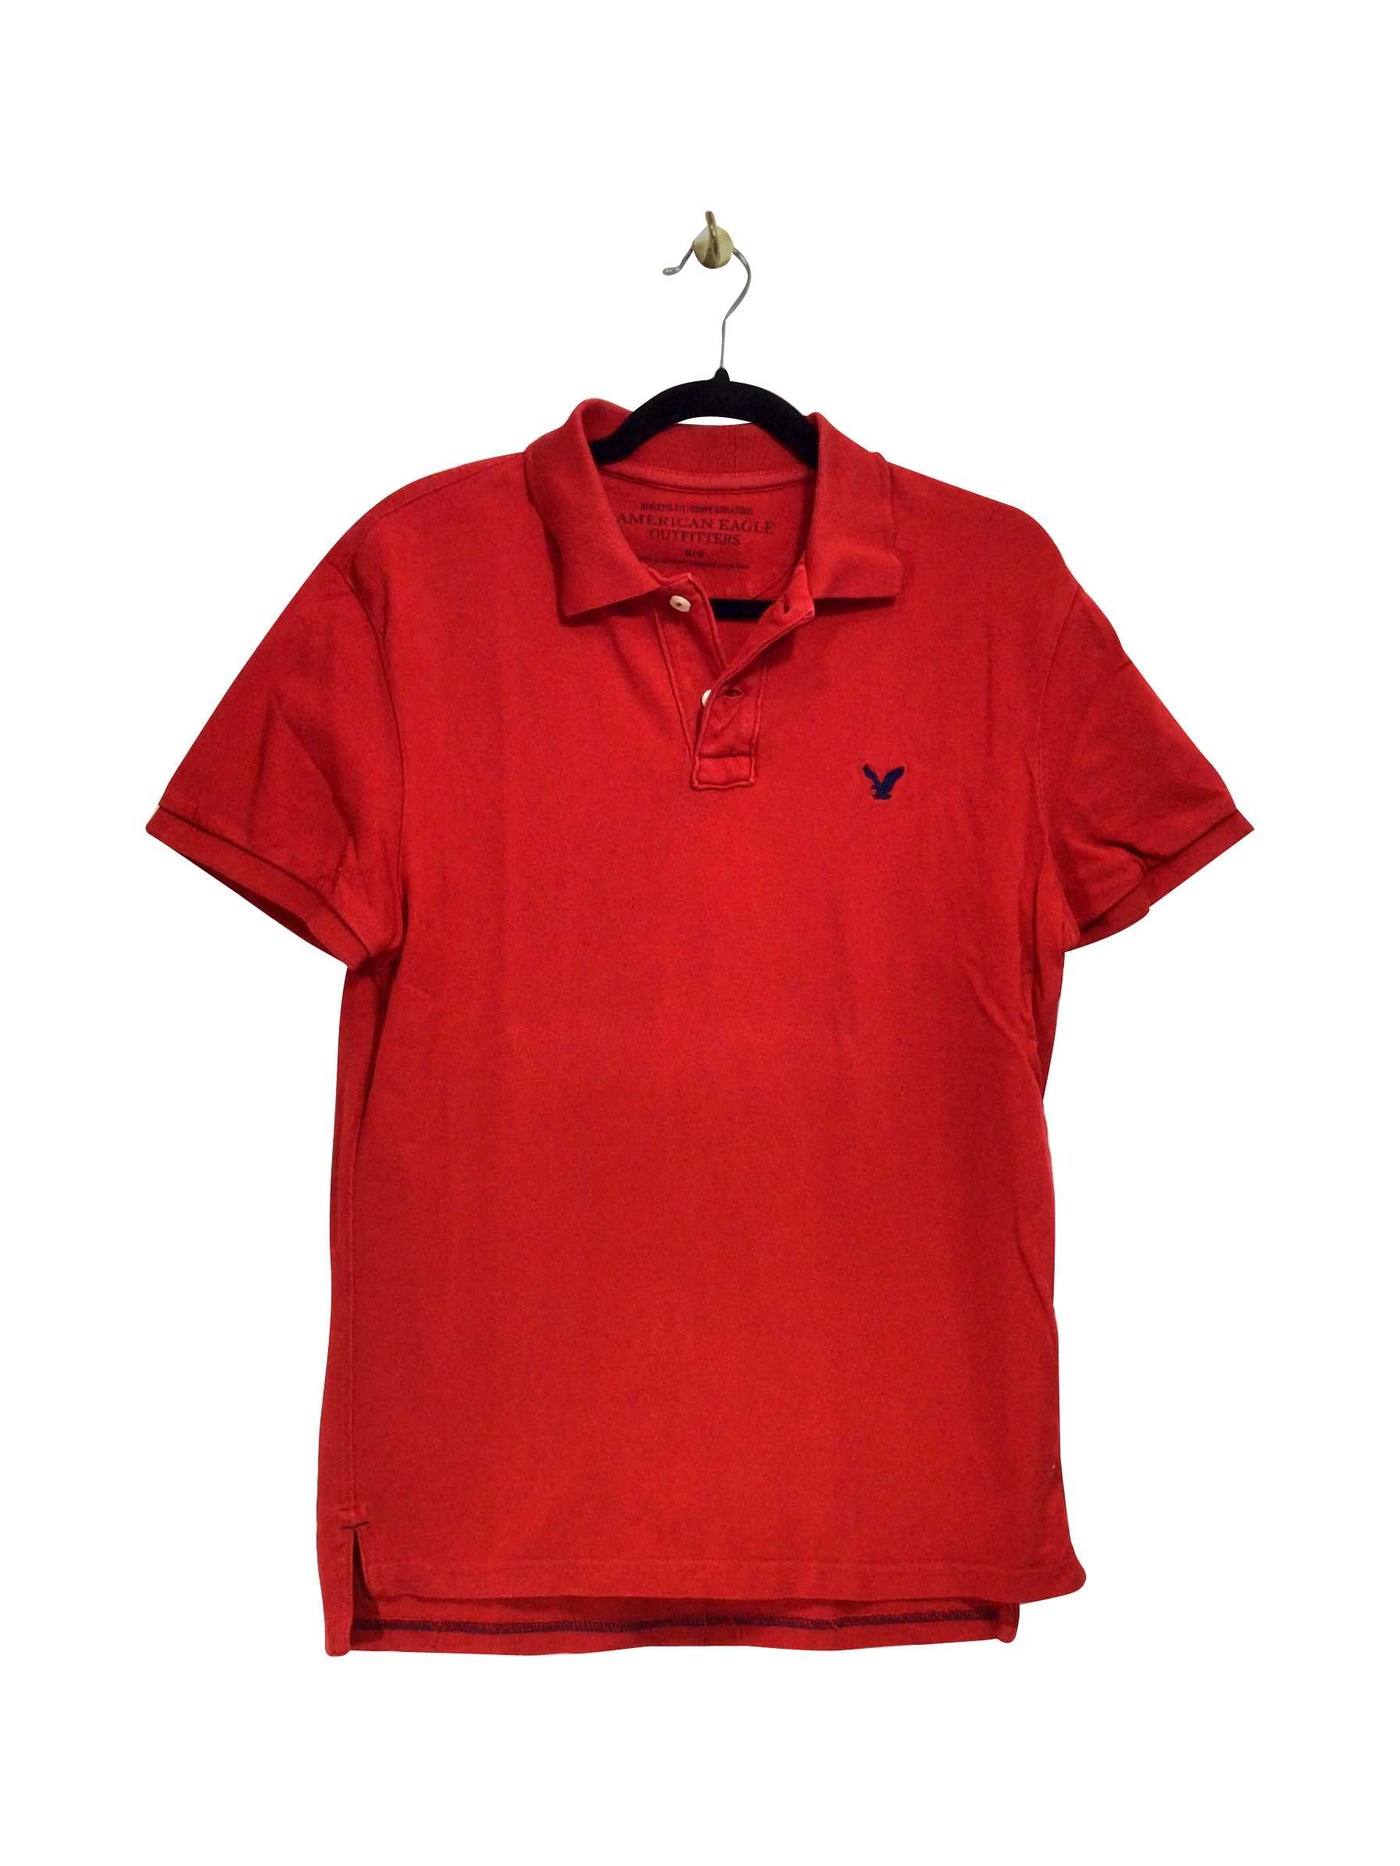 AMERICAN EAGLE Regular fit T-shirt in Red  -  M  16.90 Koop